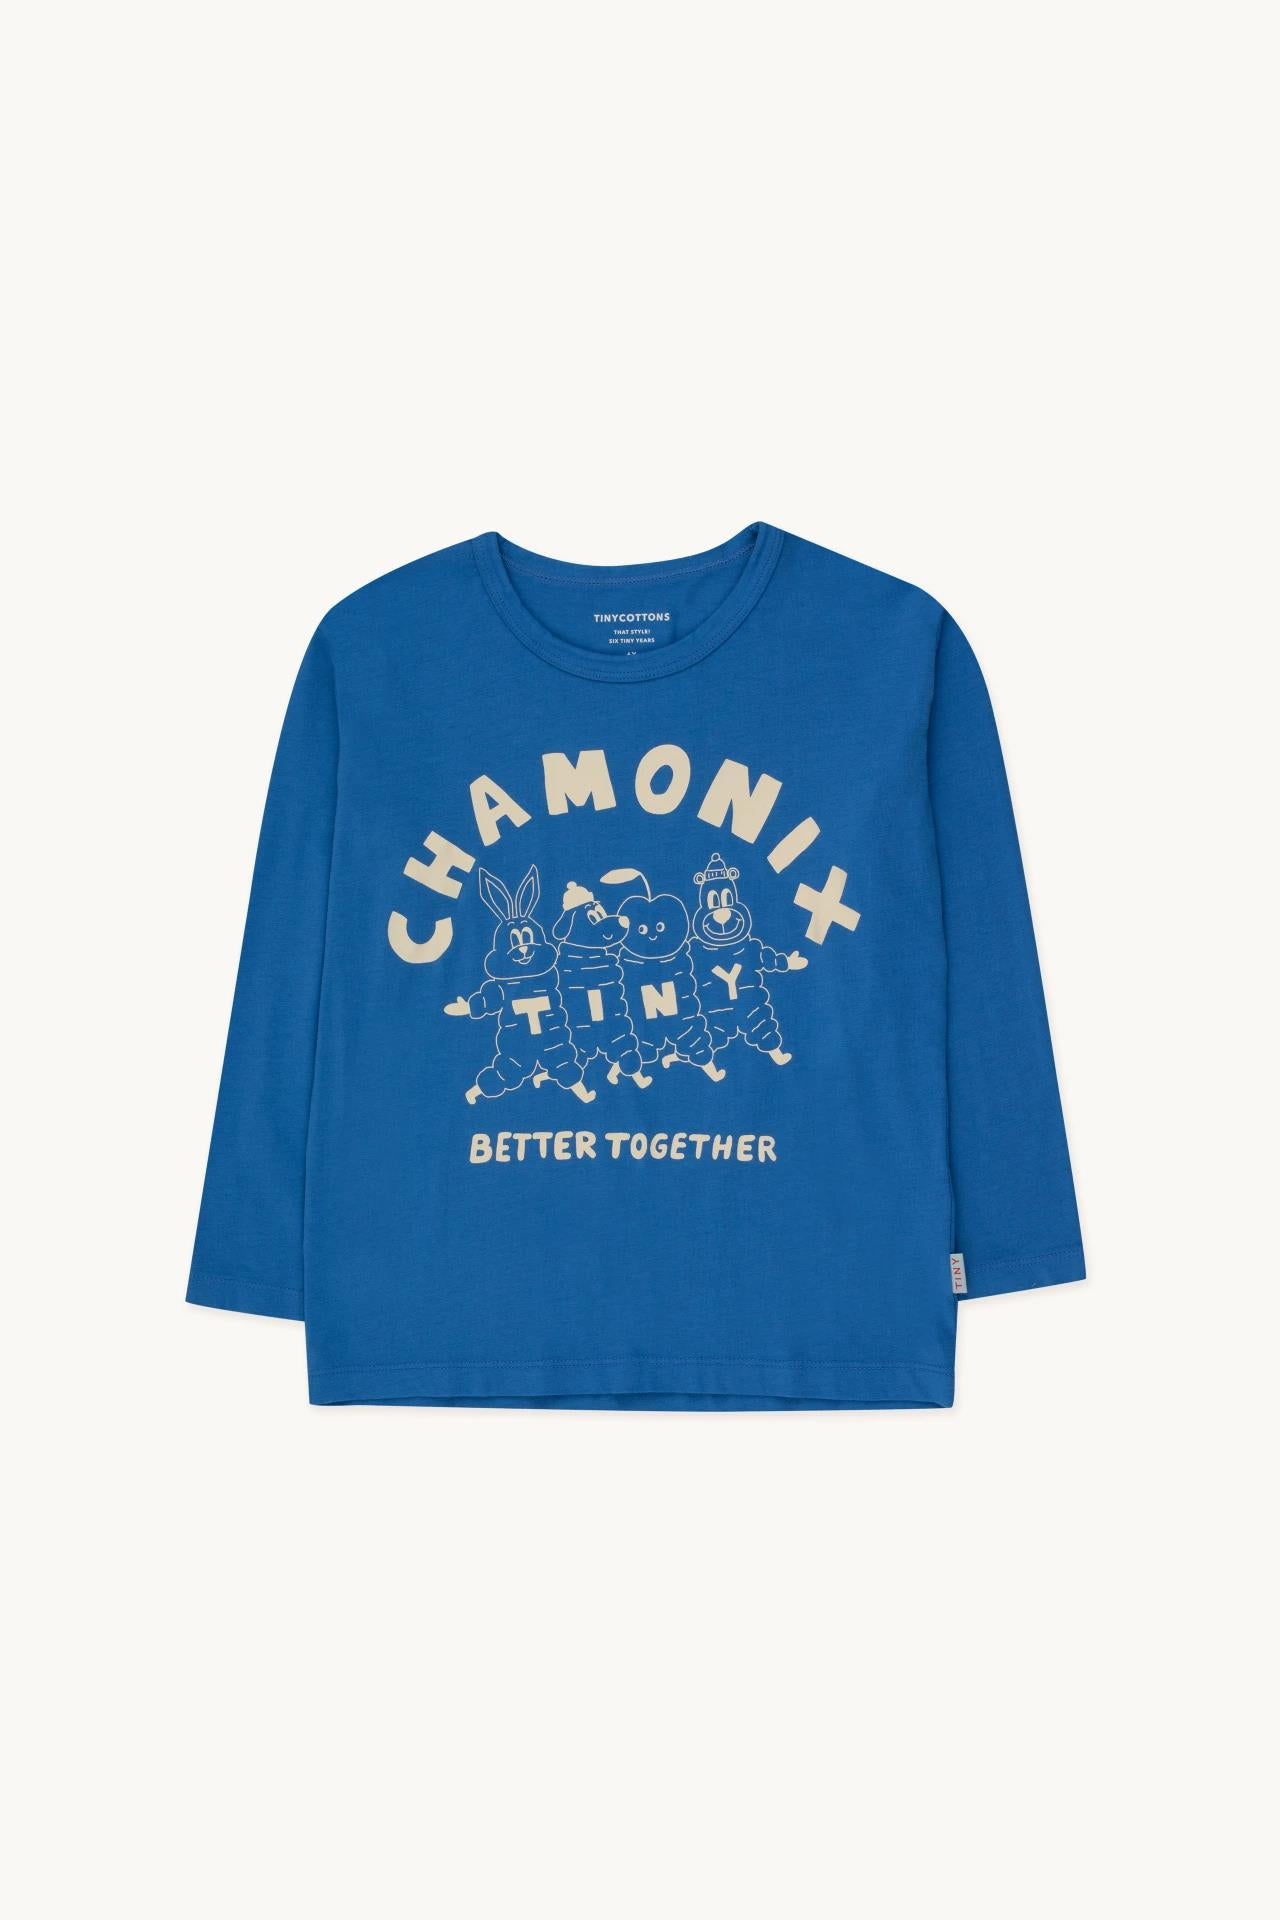 Chamonix Tee,  Blue- Tiny Cottons